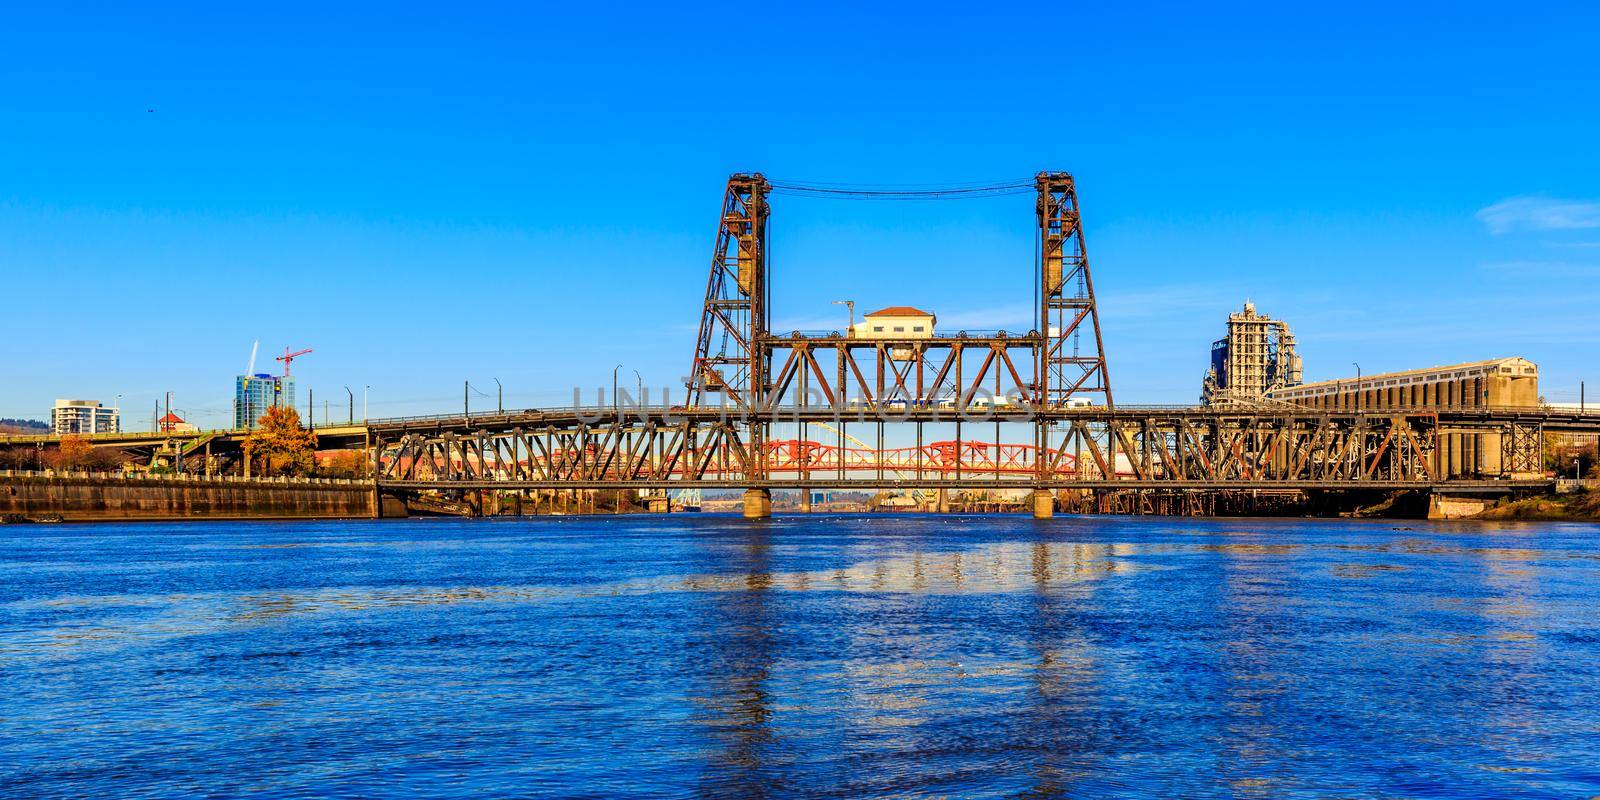 A wide angle view of the steel bridge crossing the Willamette river in Portland, Oregon.